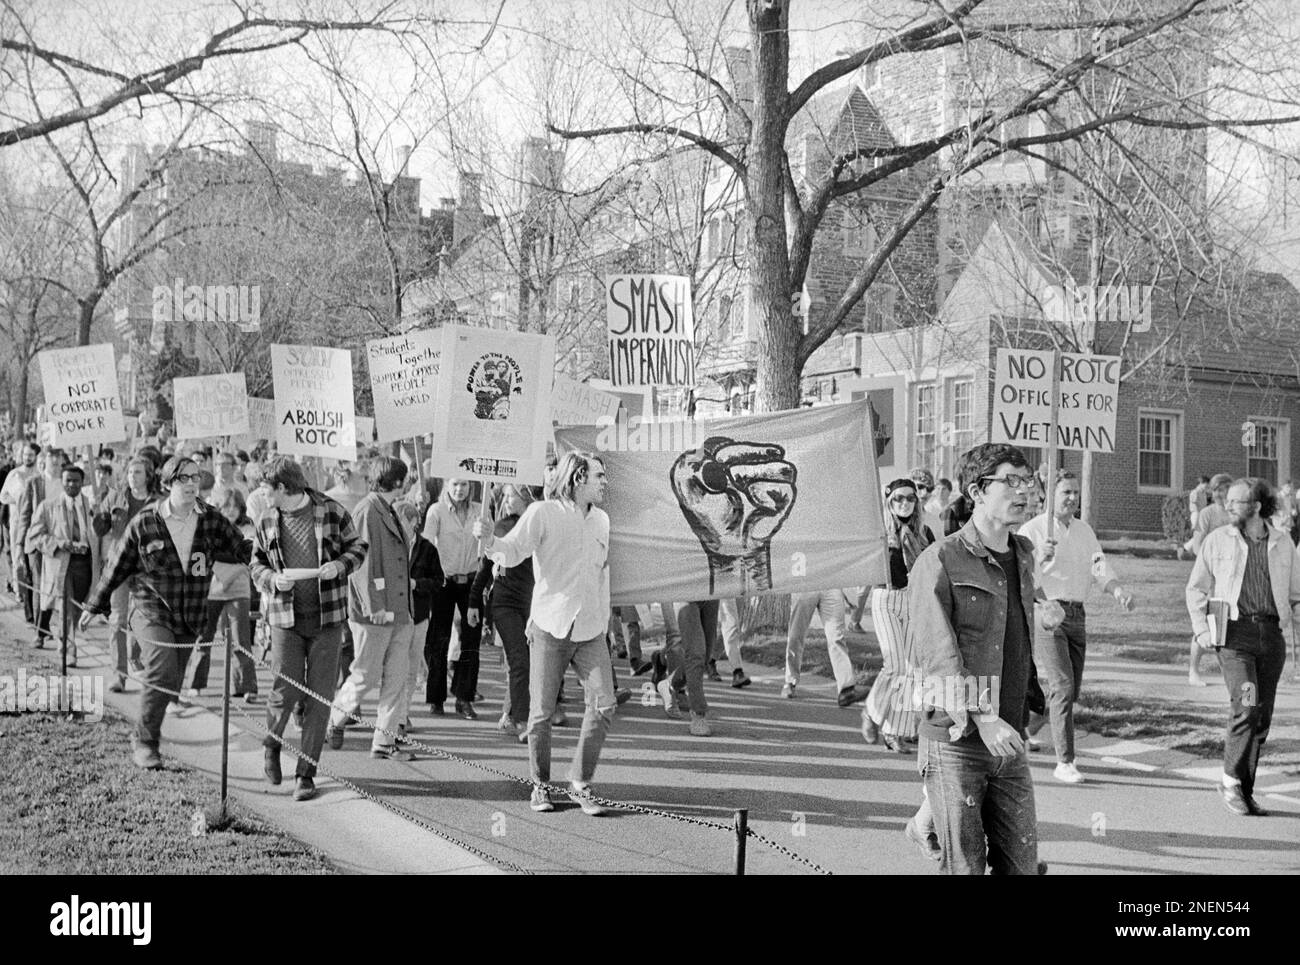 R.O.T.C. und Anti-war-Demonstranten, Princeton University, Princeton, New Jersey, USA, John T. Bledsoe, USA News & World Report Magazine Fotosammlung, 25. April 1969 Stockfoto